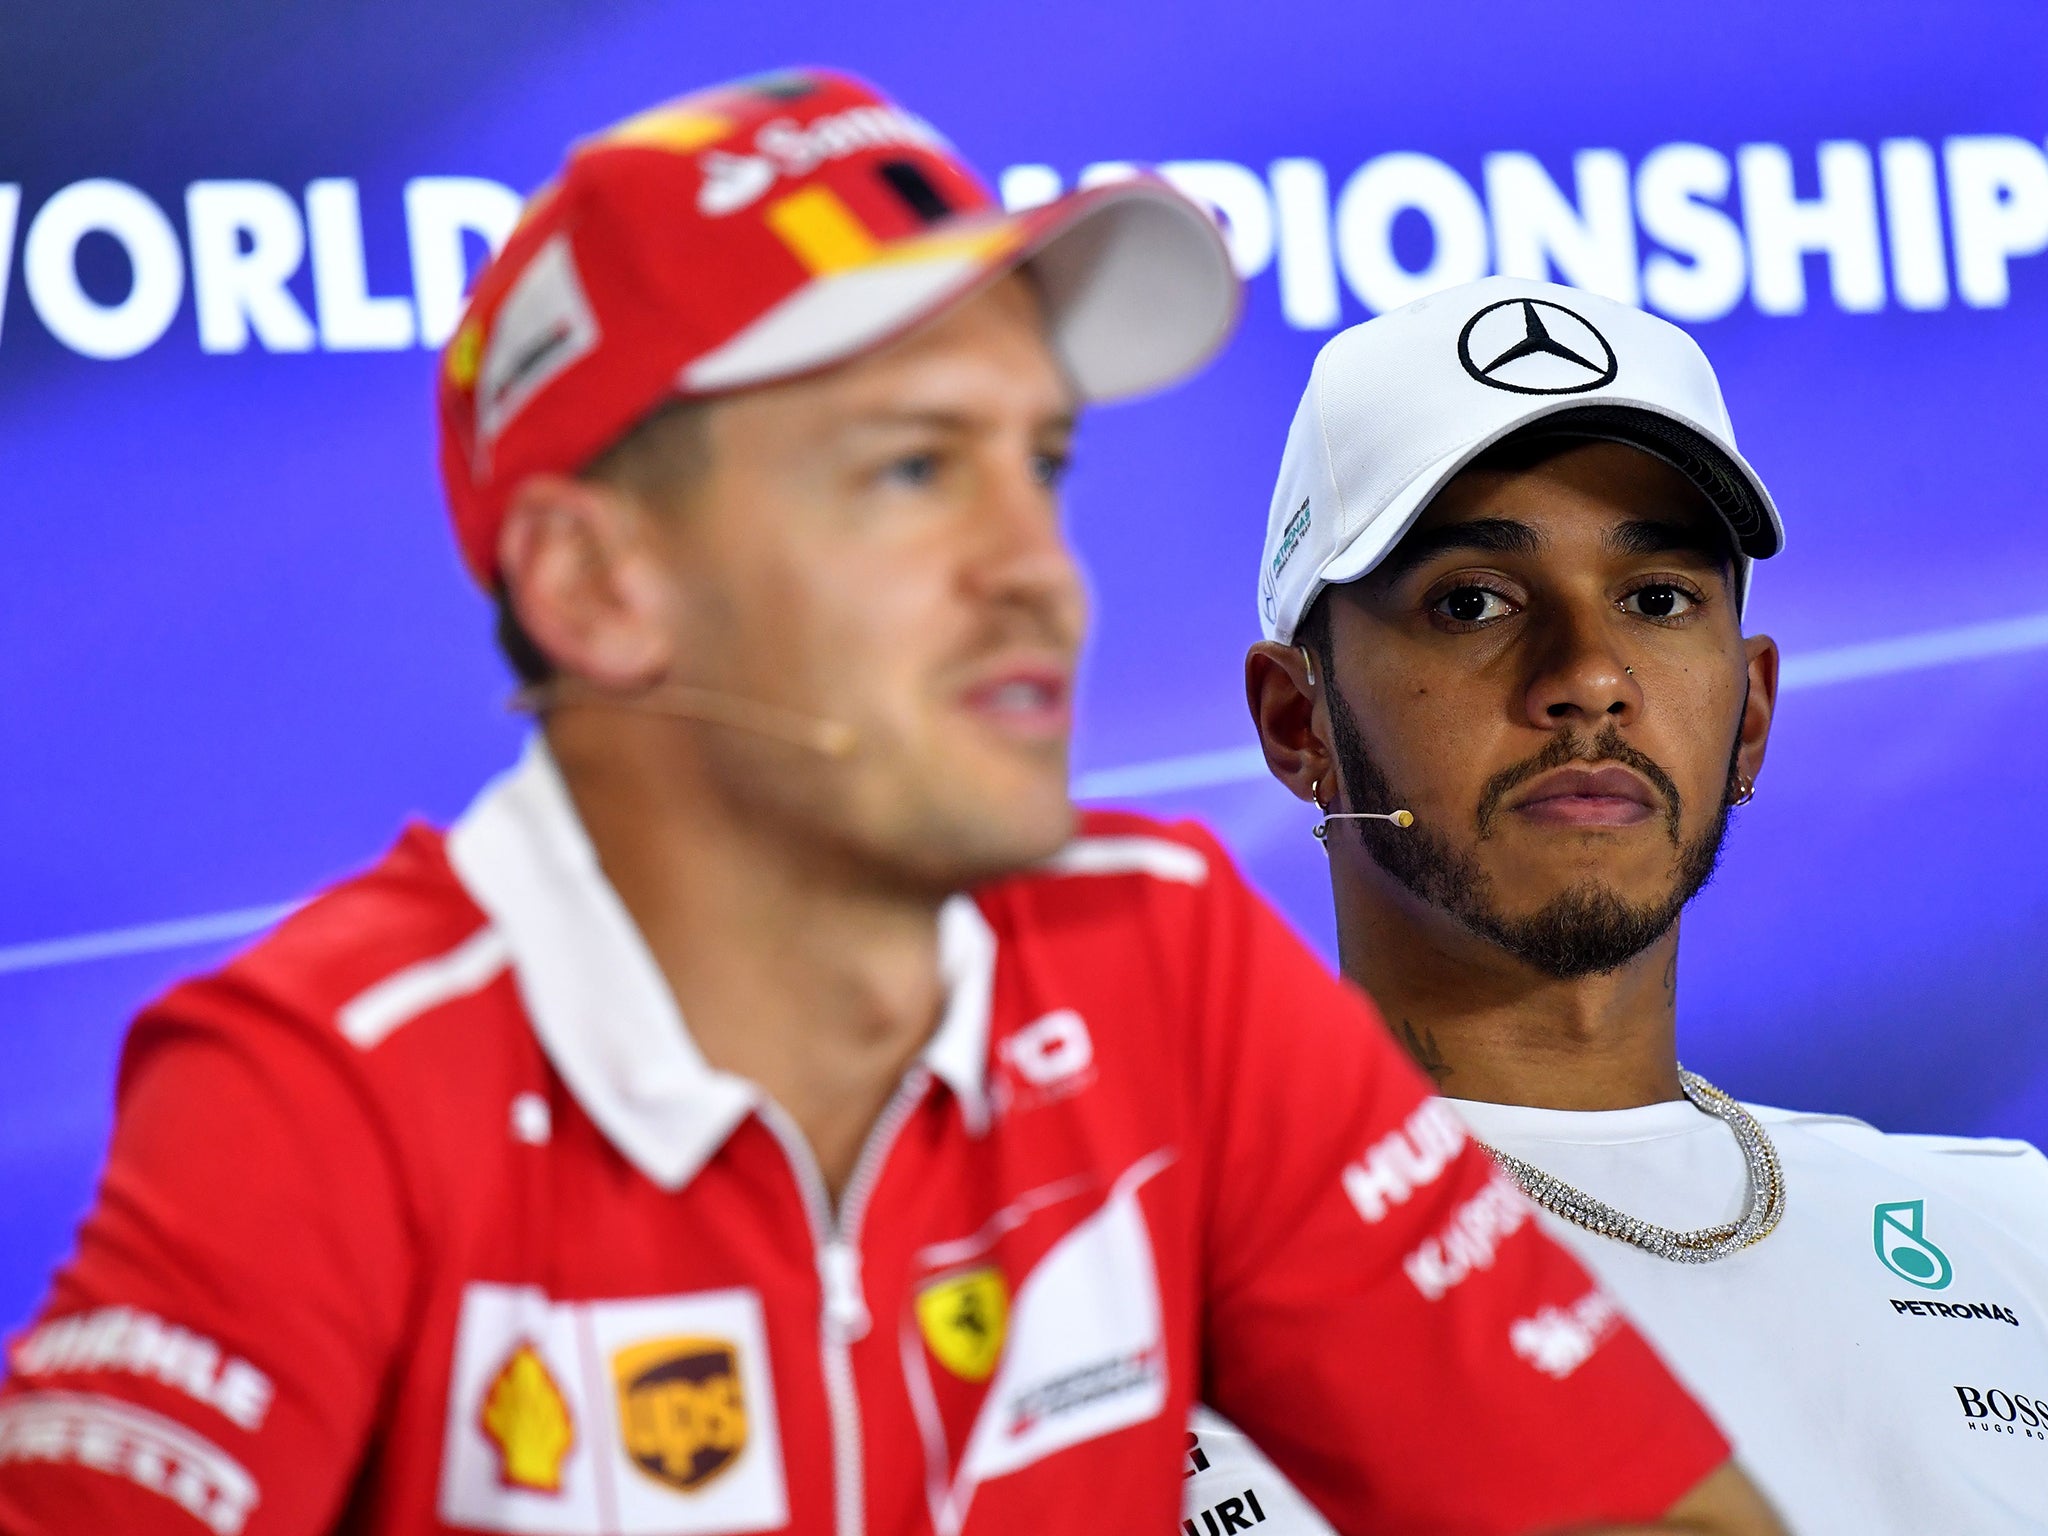 Hamilton's battle with Vettel ignited last year’s championship